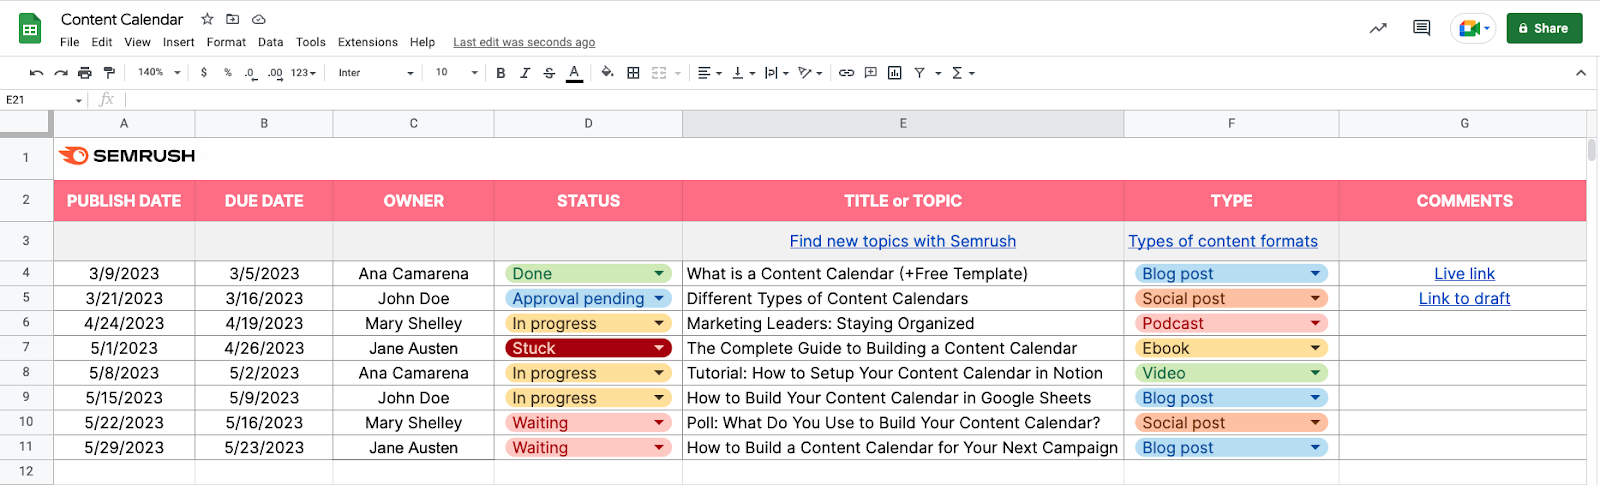 Semrush's content calendar template